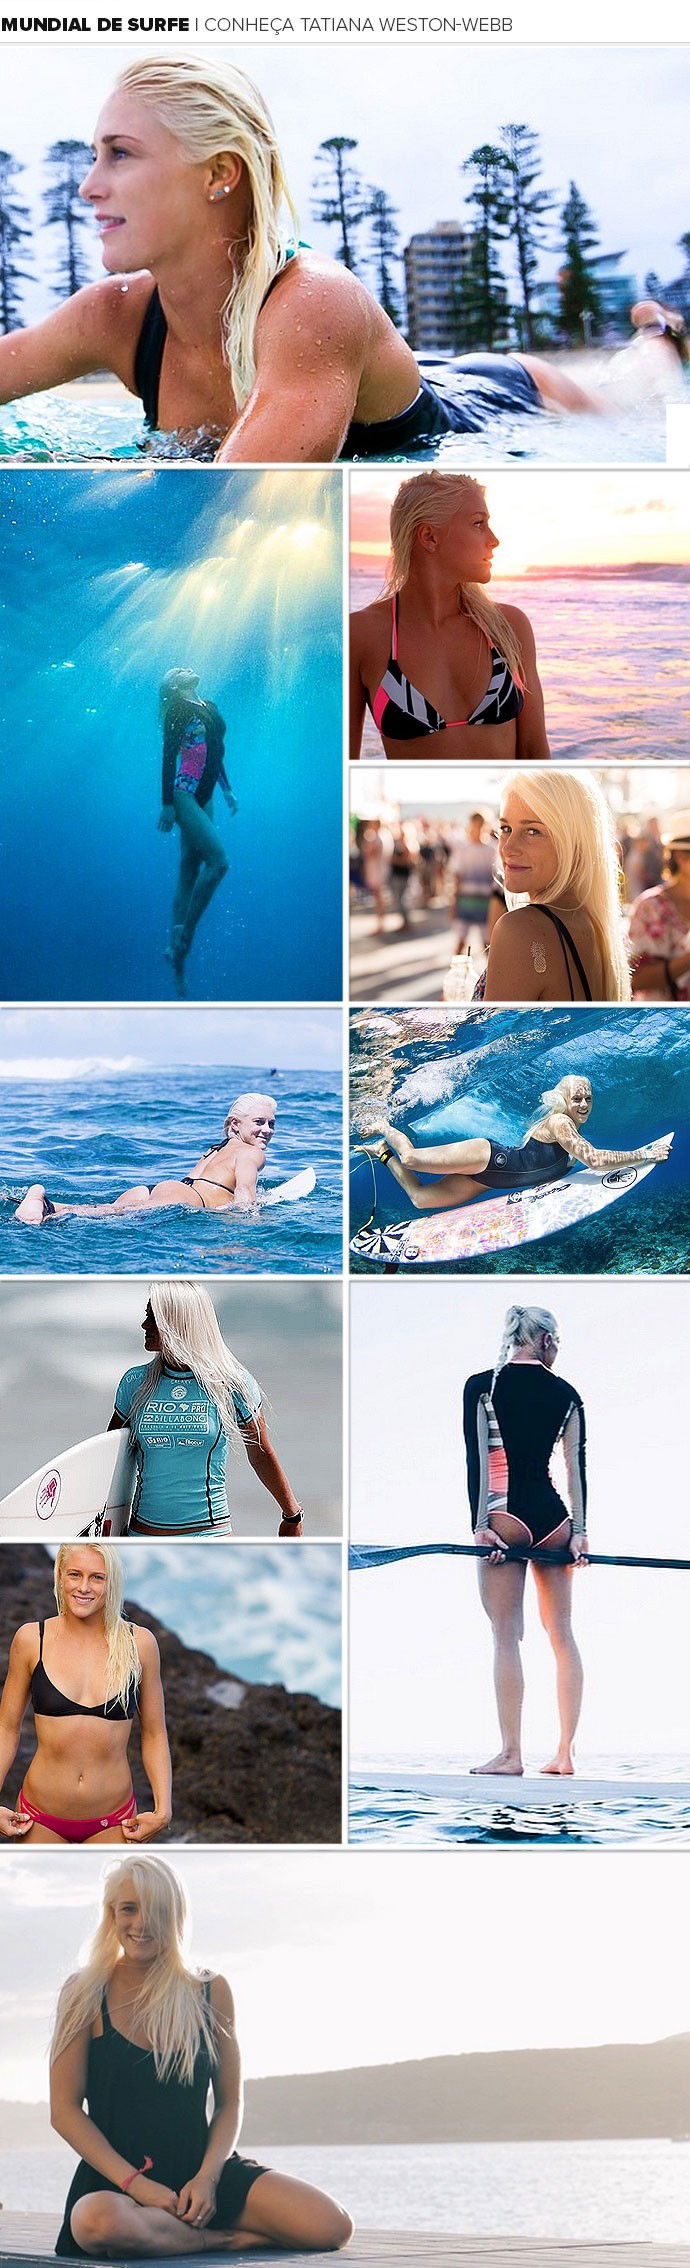 MUNDIAL DE SURFE | Conheça Tatiana Weston-Webb (Foto: Editoria de Arte)